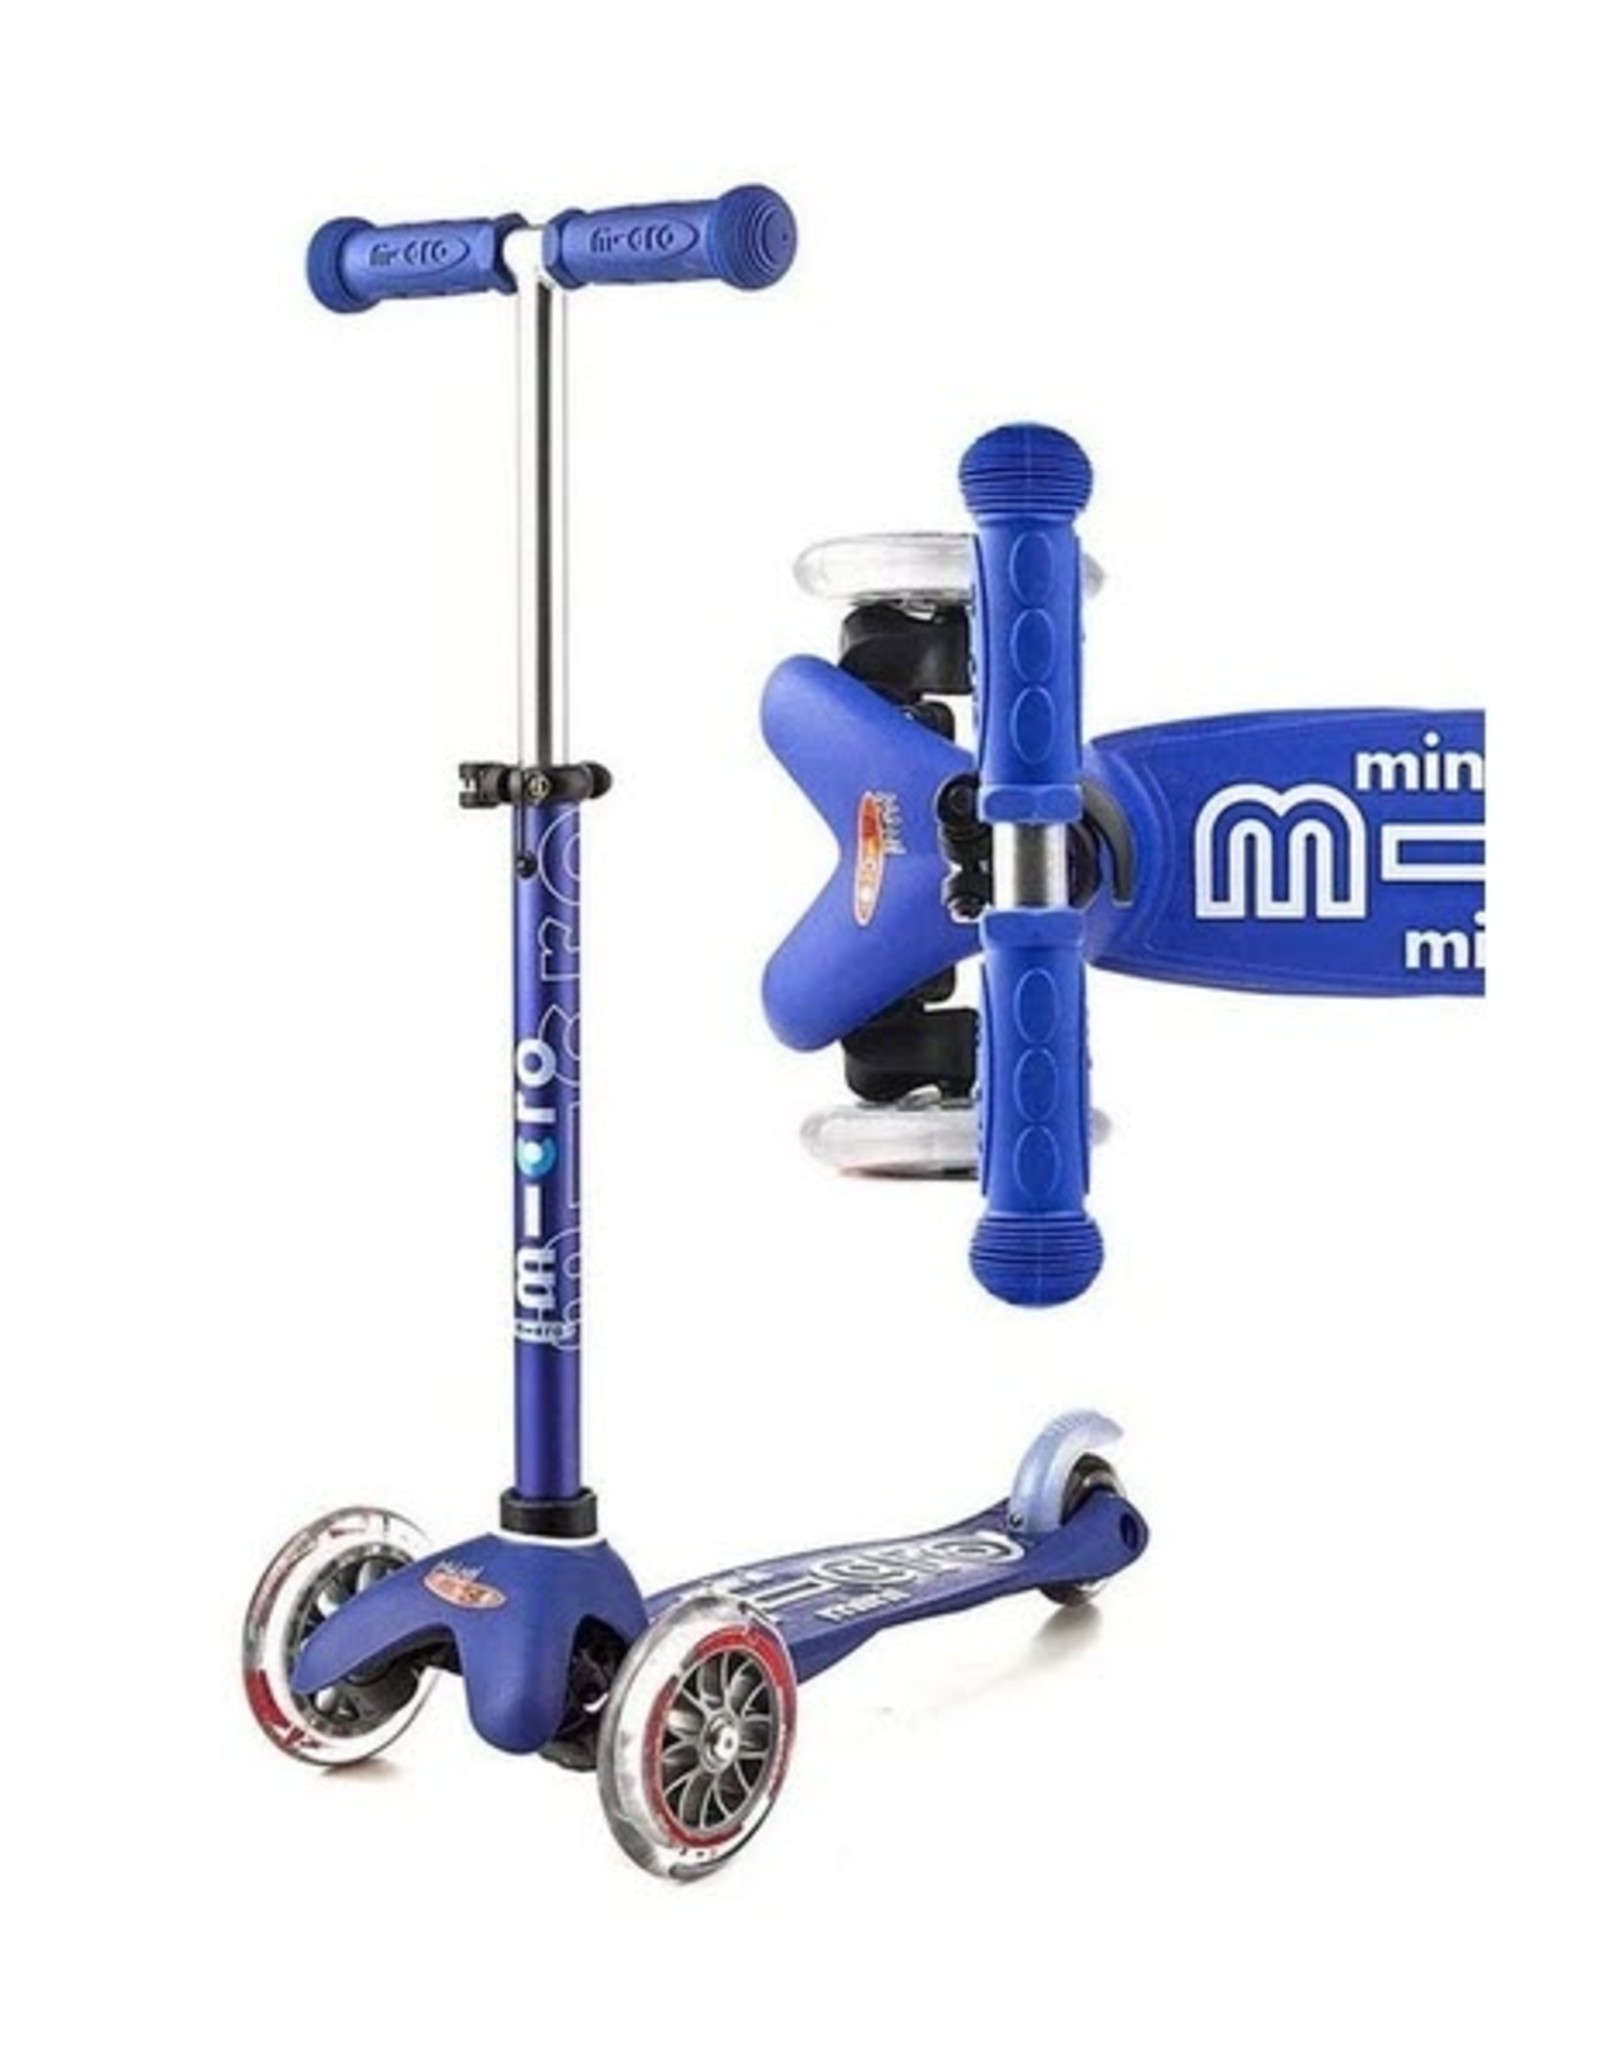 Micro Scooter Mini Micro Deluxe Scooter - Blue